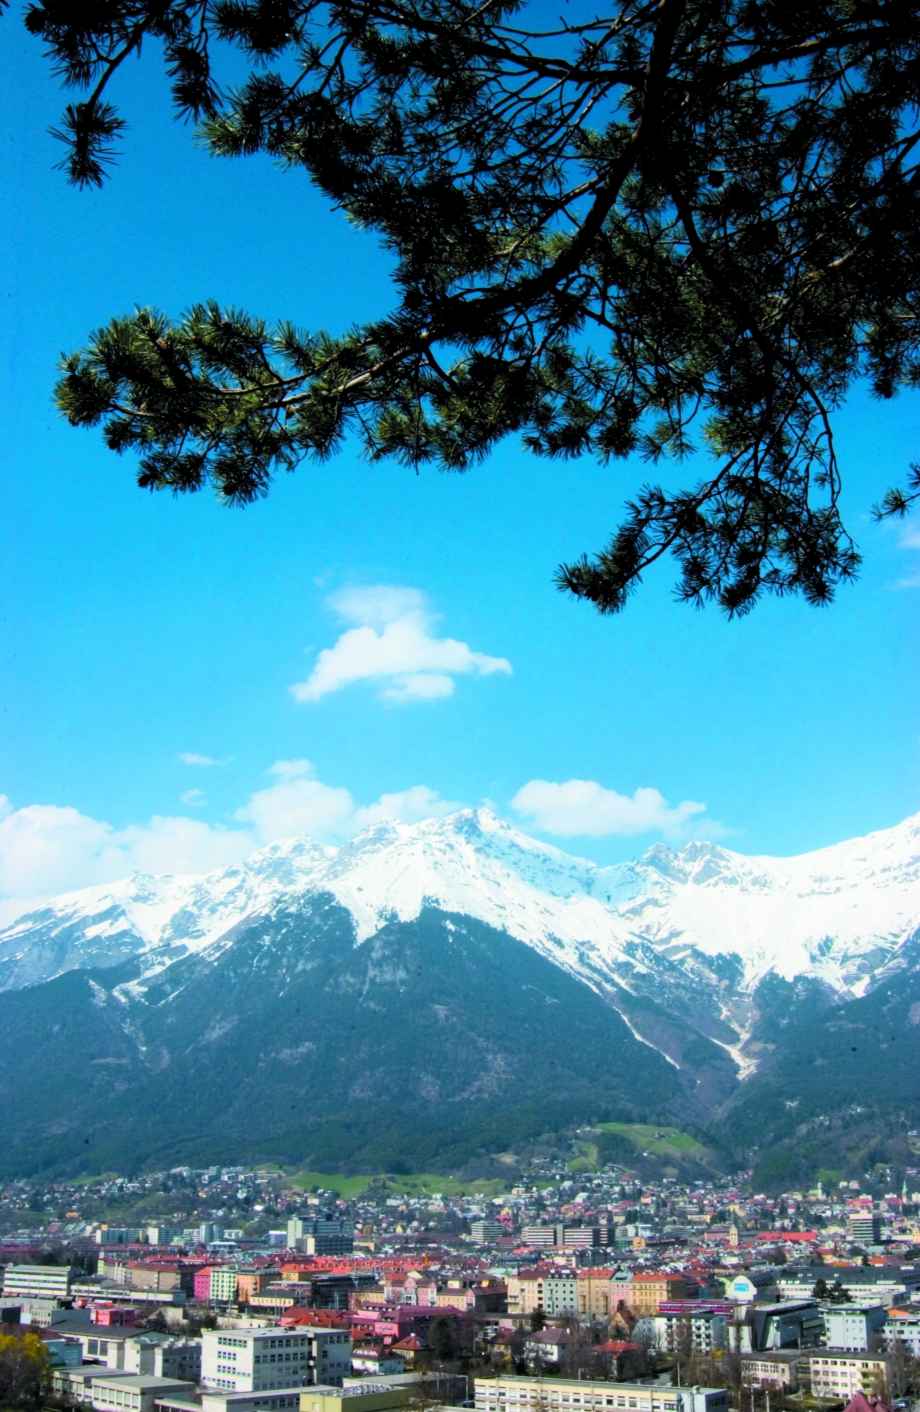 The Mountains of Innsbruck - AspirantSG